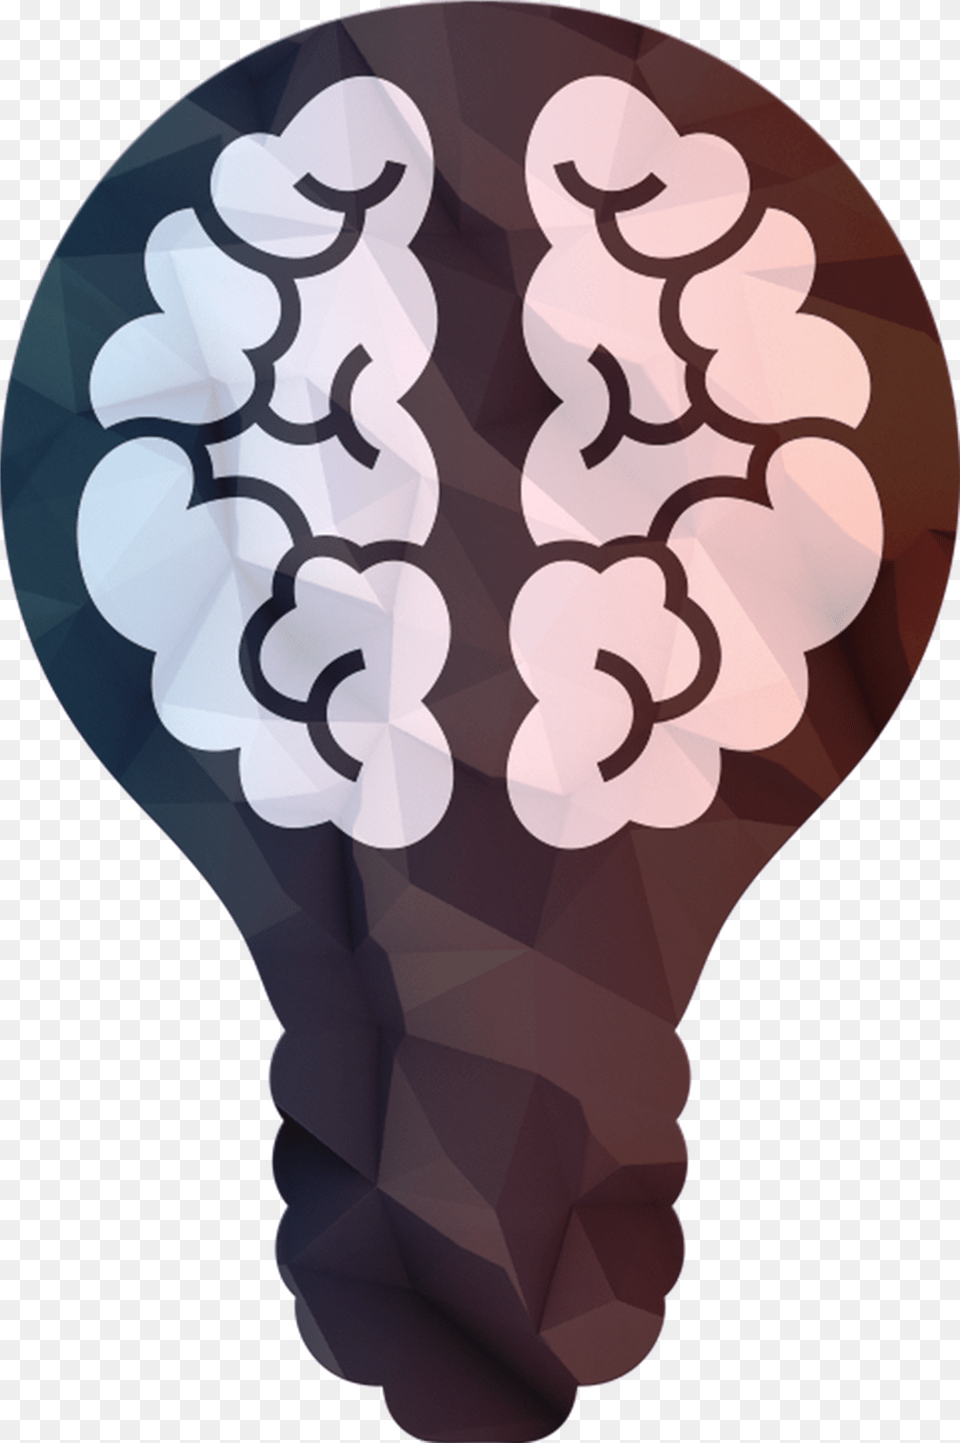 Light Bulb With Brain Inside Drawing Imagenes De Cerebro Free Transparent Png